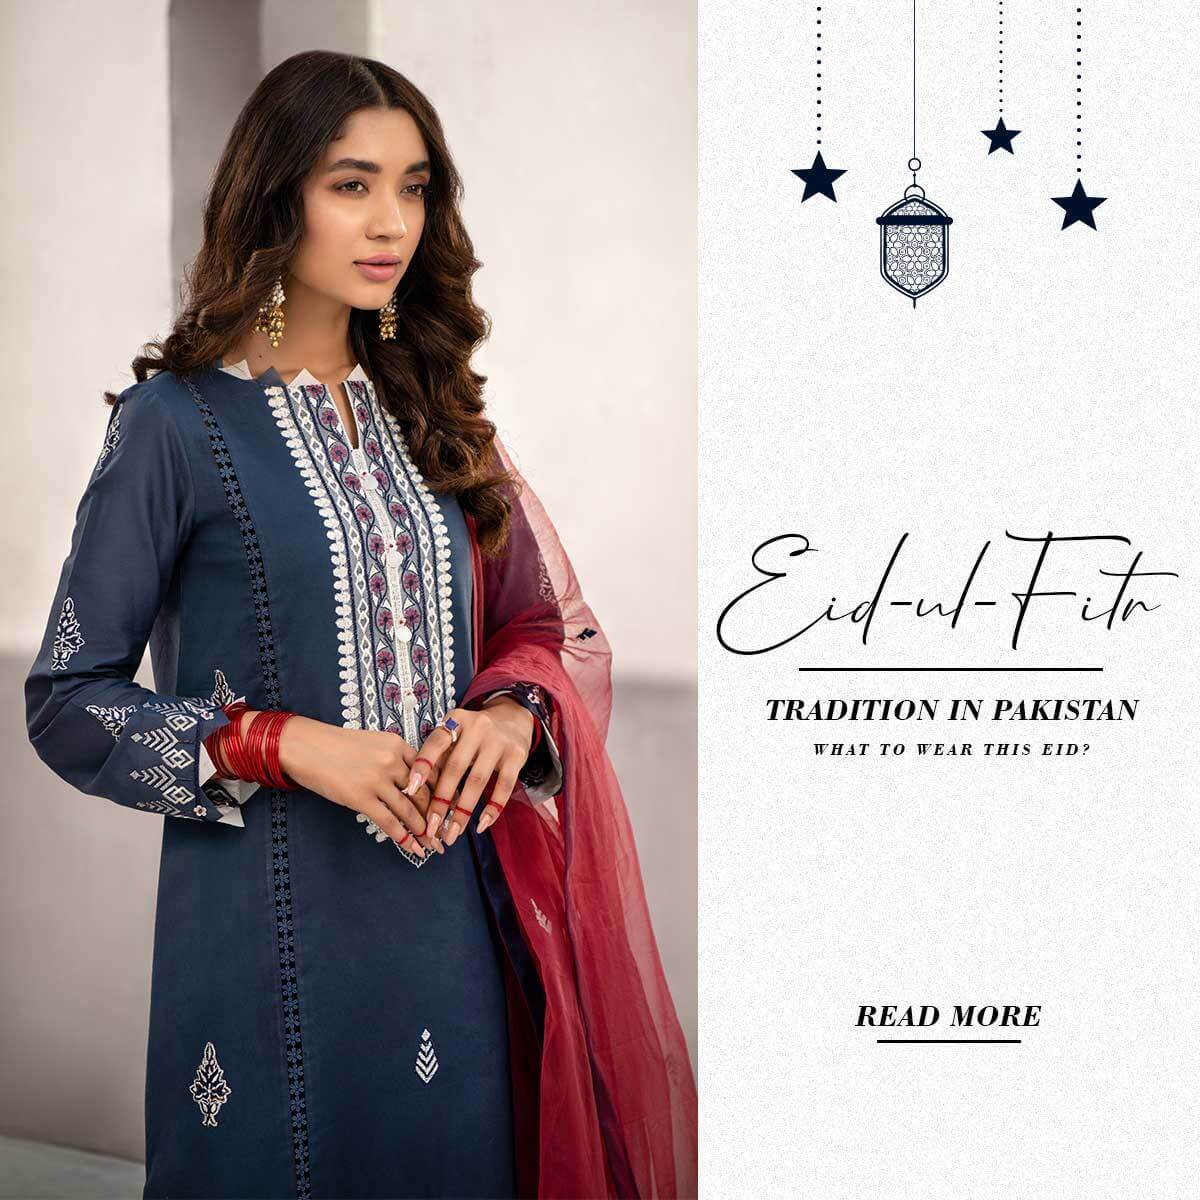 Eid-Ul-Fitr Tradition/Eid Shopping in Pakistan – What to Wear This Eid?